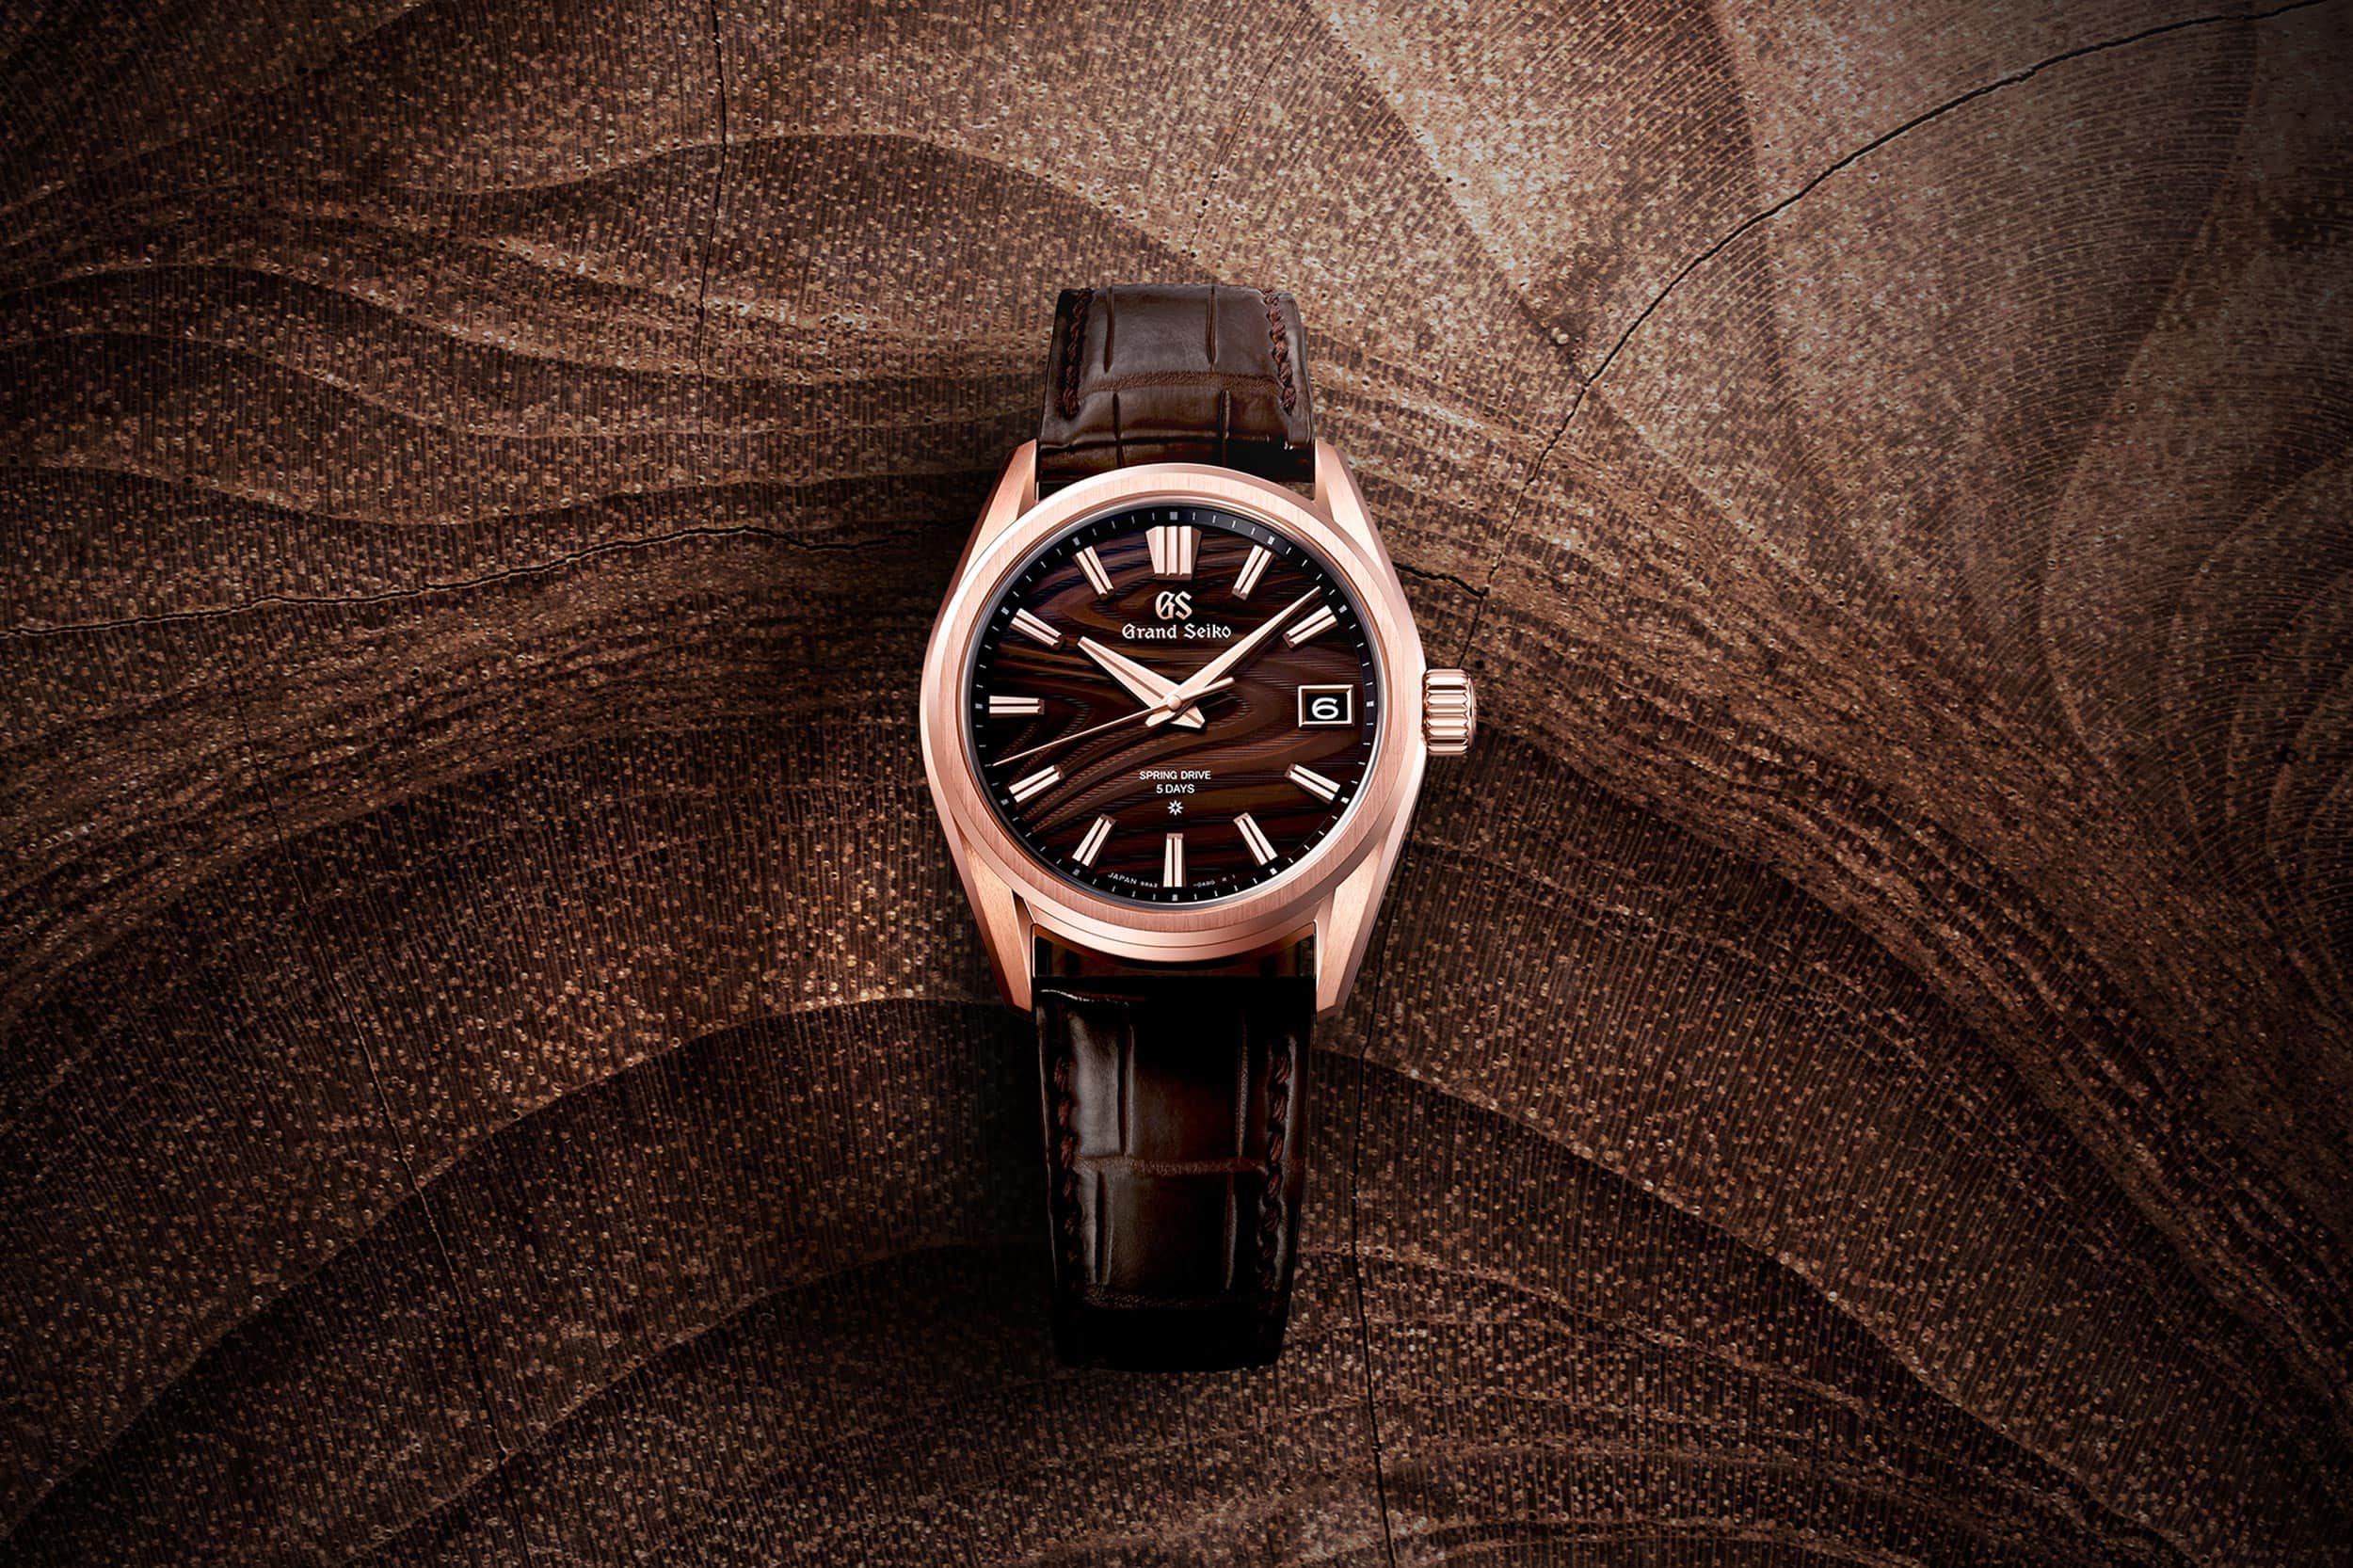 Introducing the Grand Seiko SLGA008, the Brand's Latest Precious Metal  Timepiece with a 